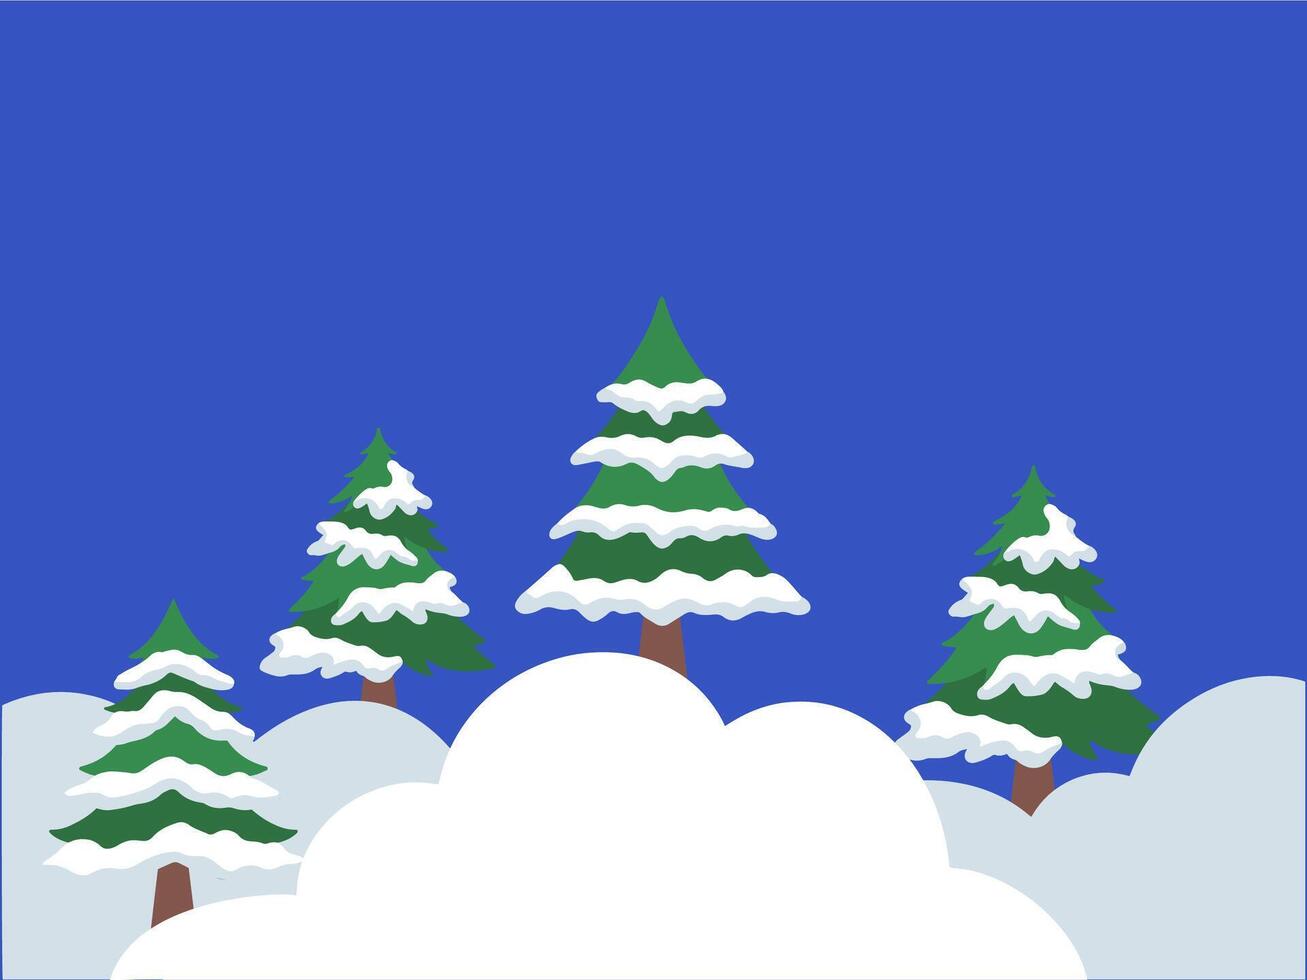 Christmas Tree Frame Background Illustration vector